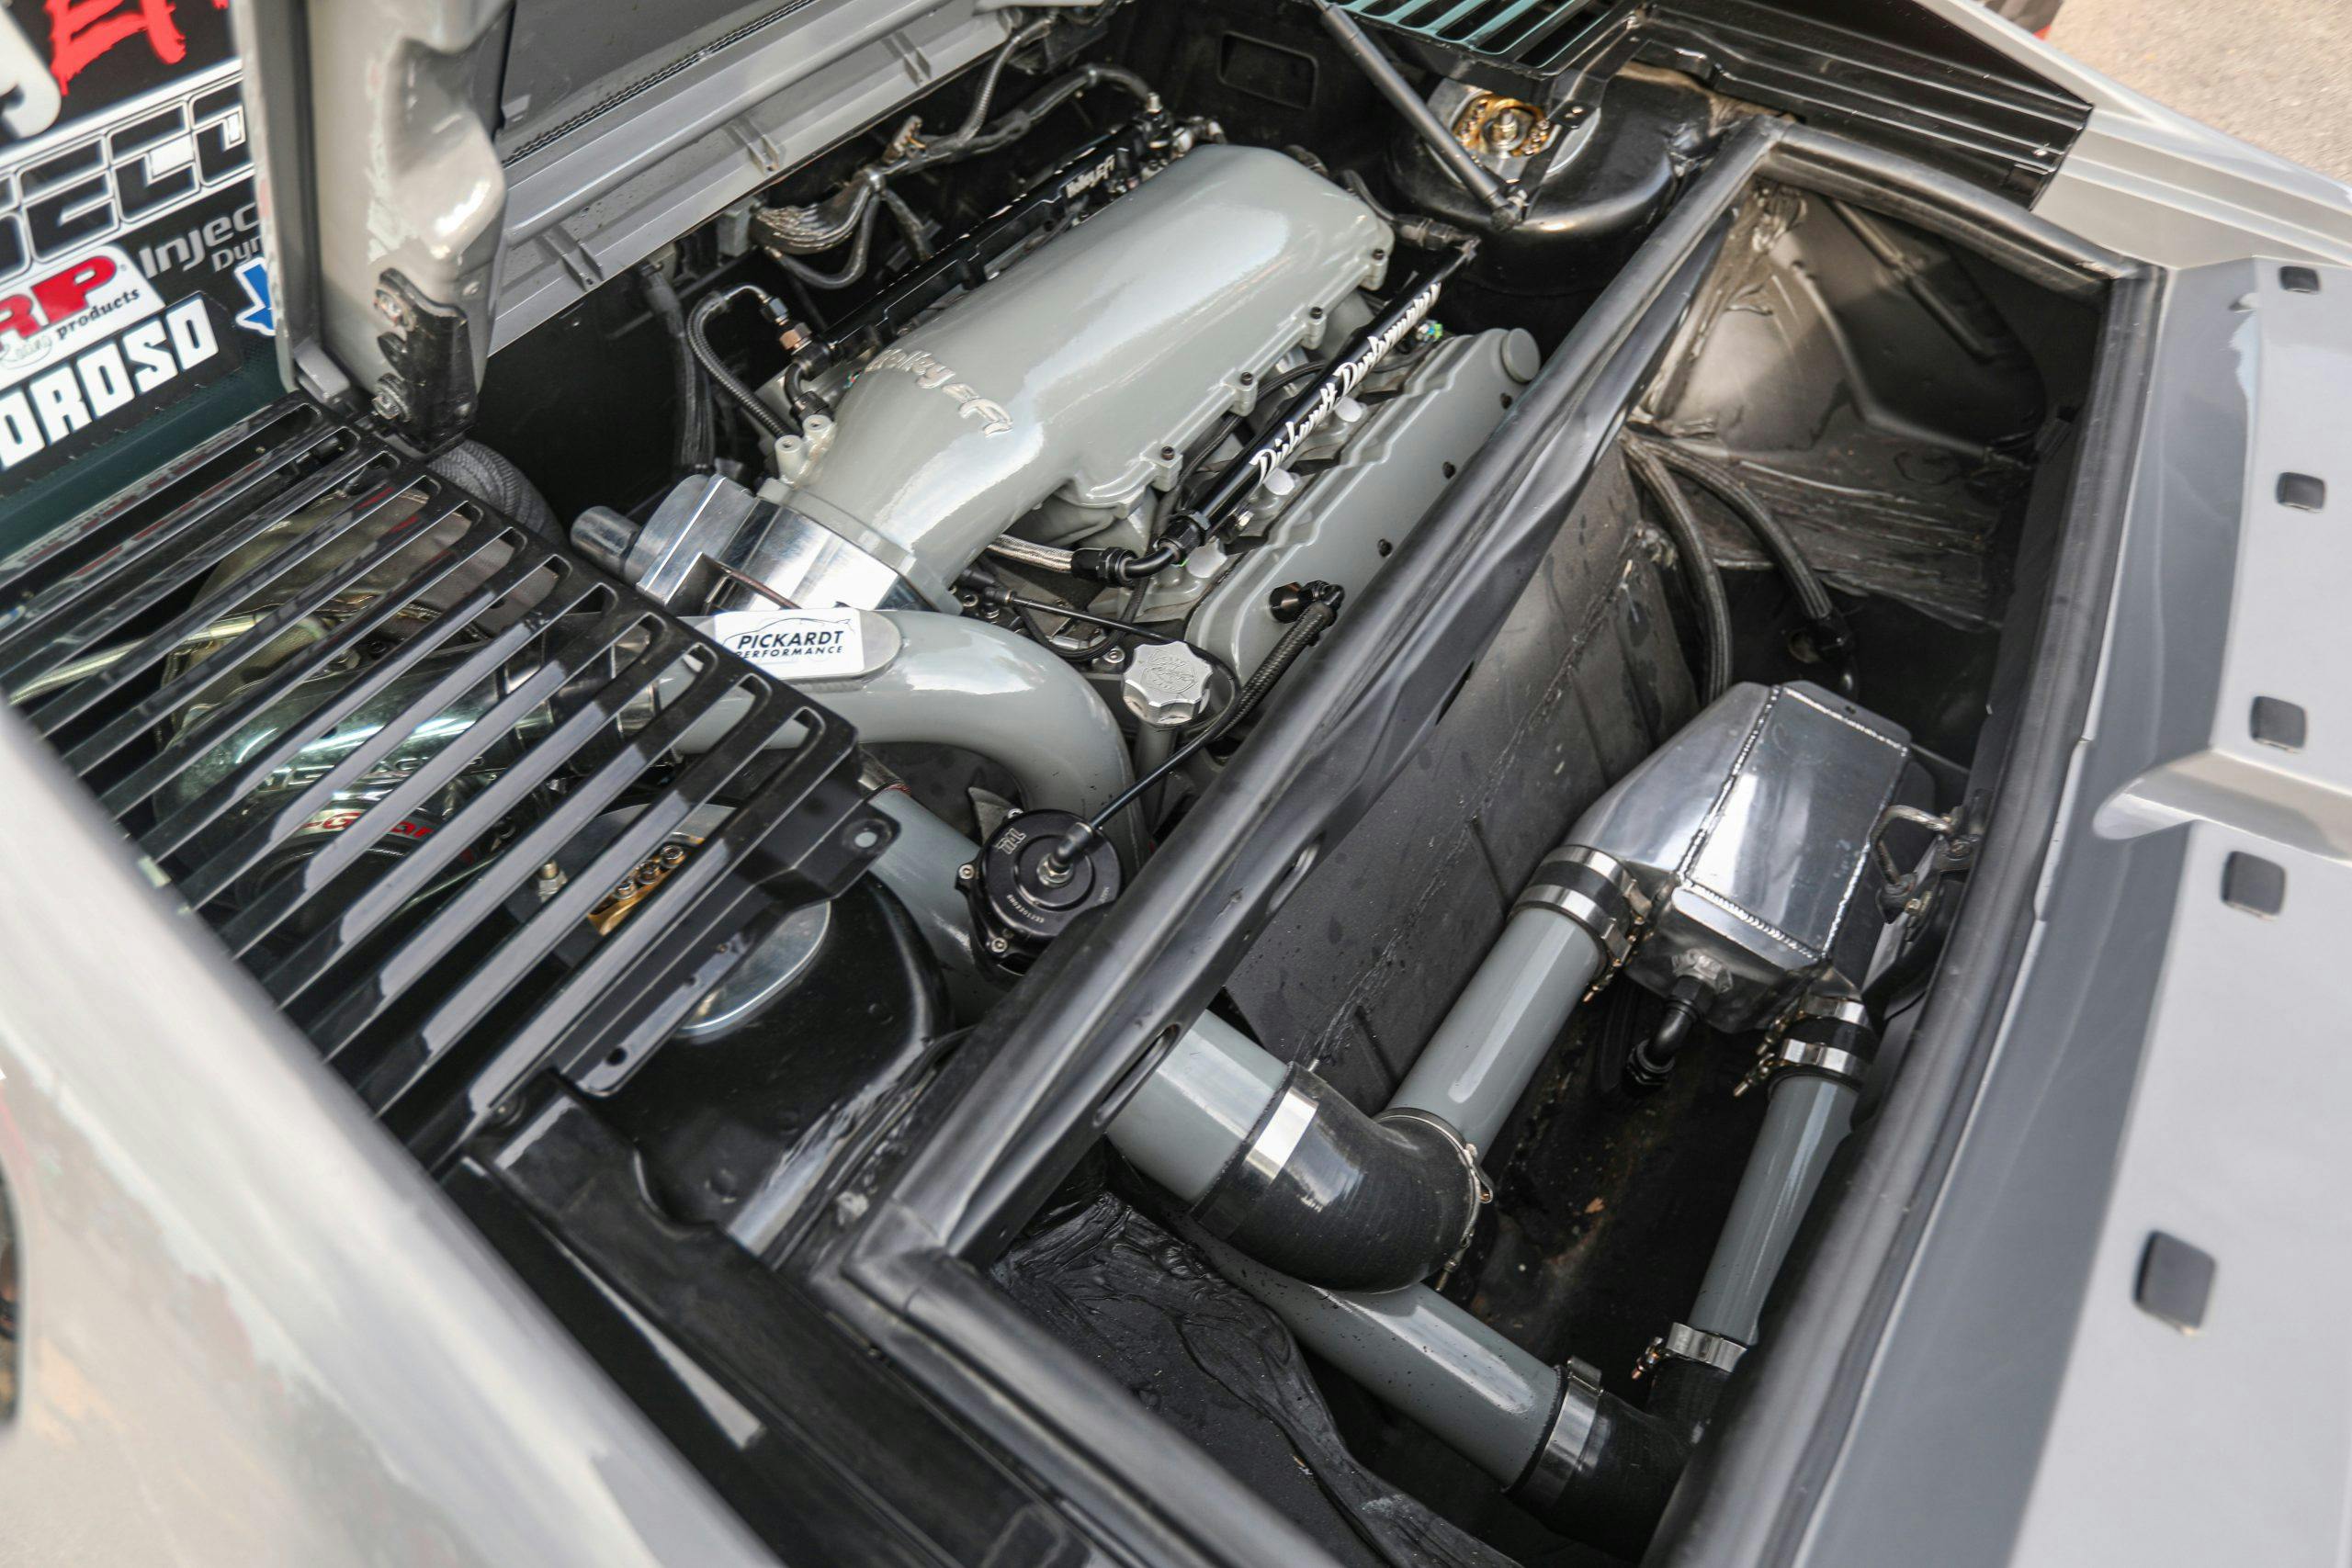 1988 Fiero engine